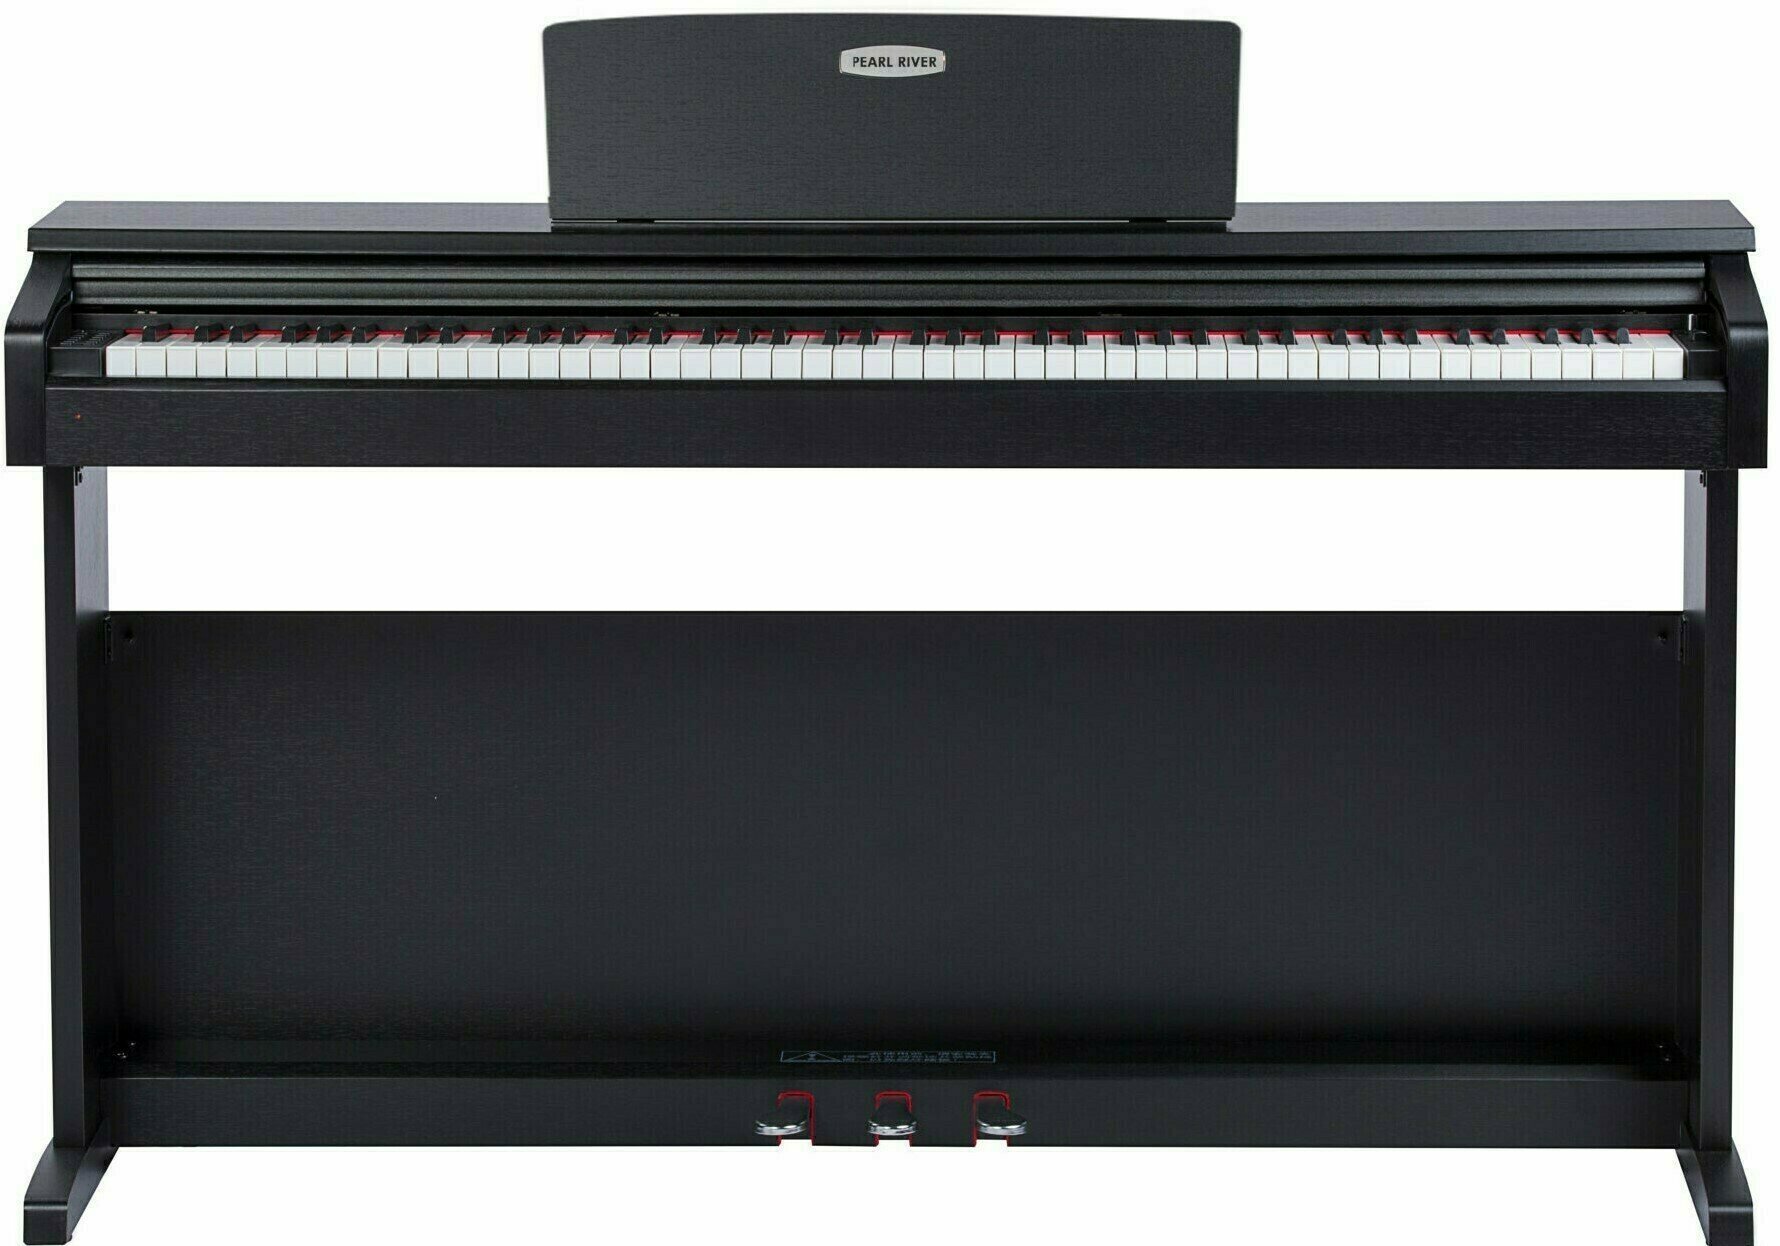 Piano digital Pearl River V05 Negro Piano digital